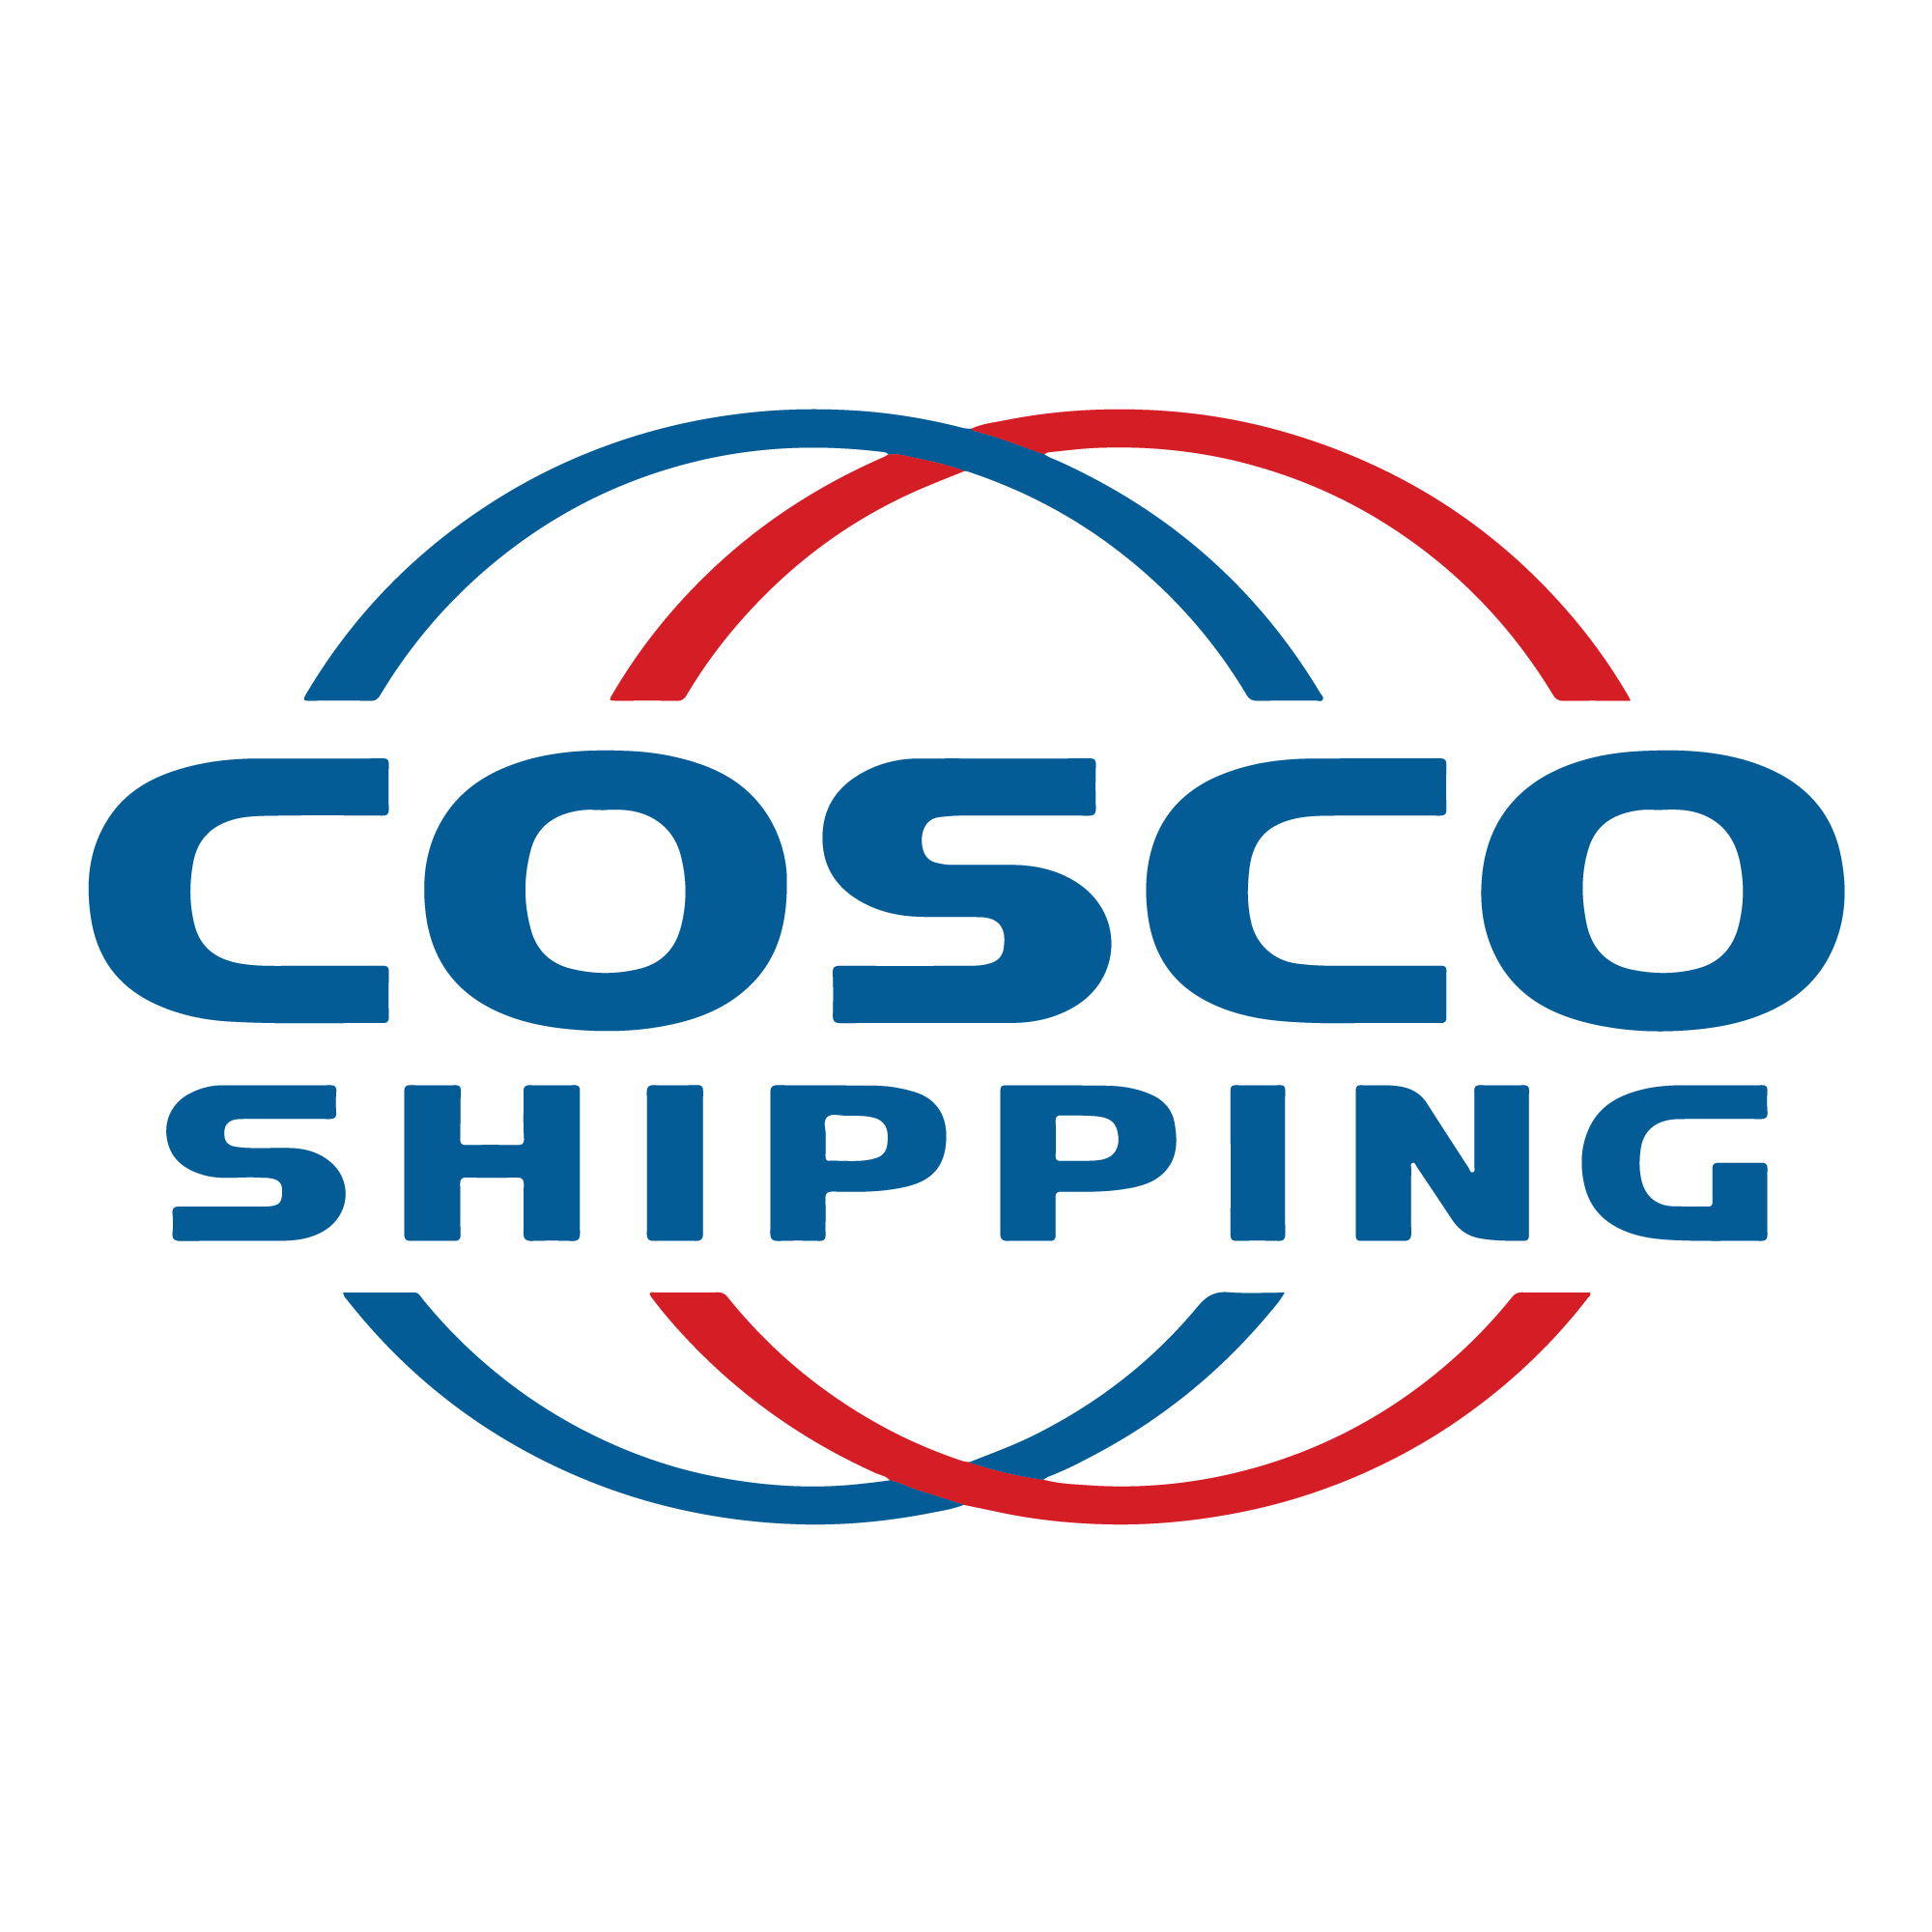 Cosco Shipping Project Logistics Shanghai